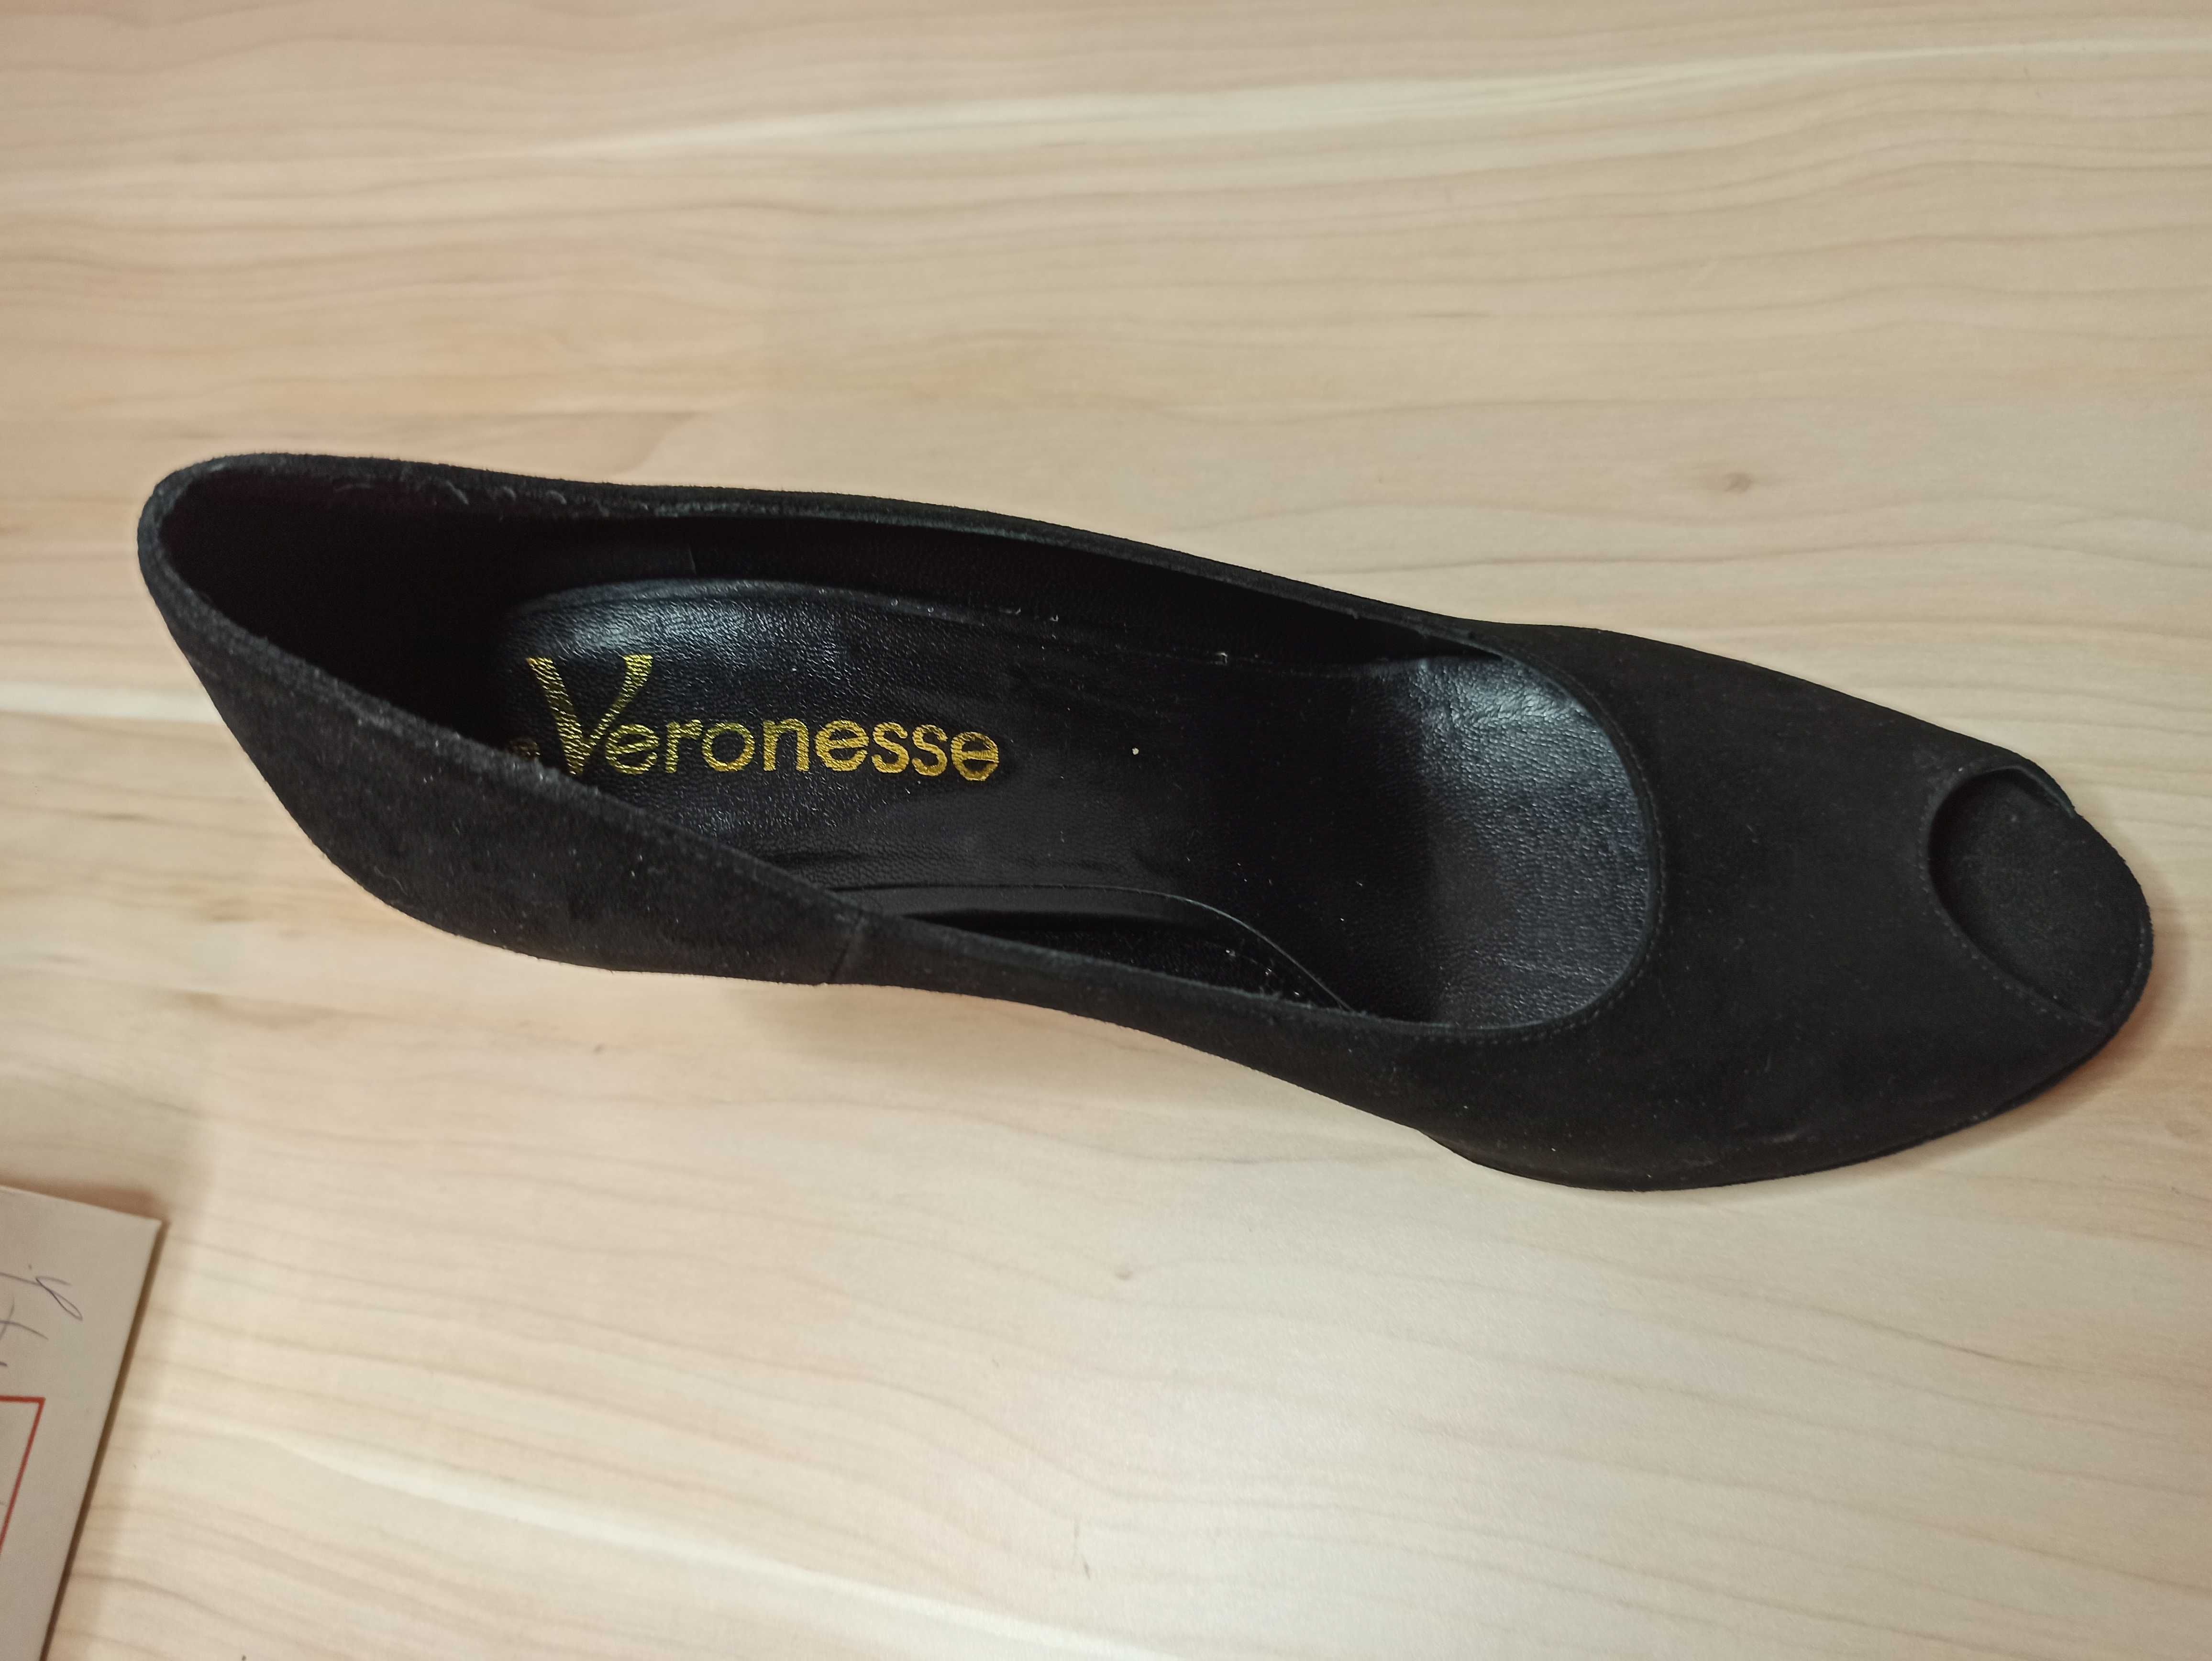 Vand pantofi dama marca Veronesse, masura 39